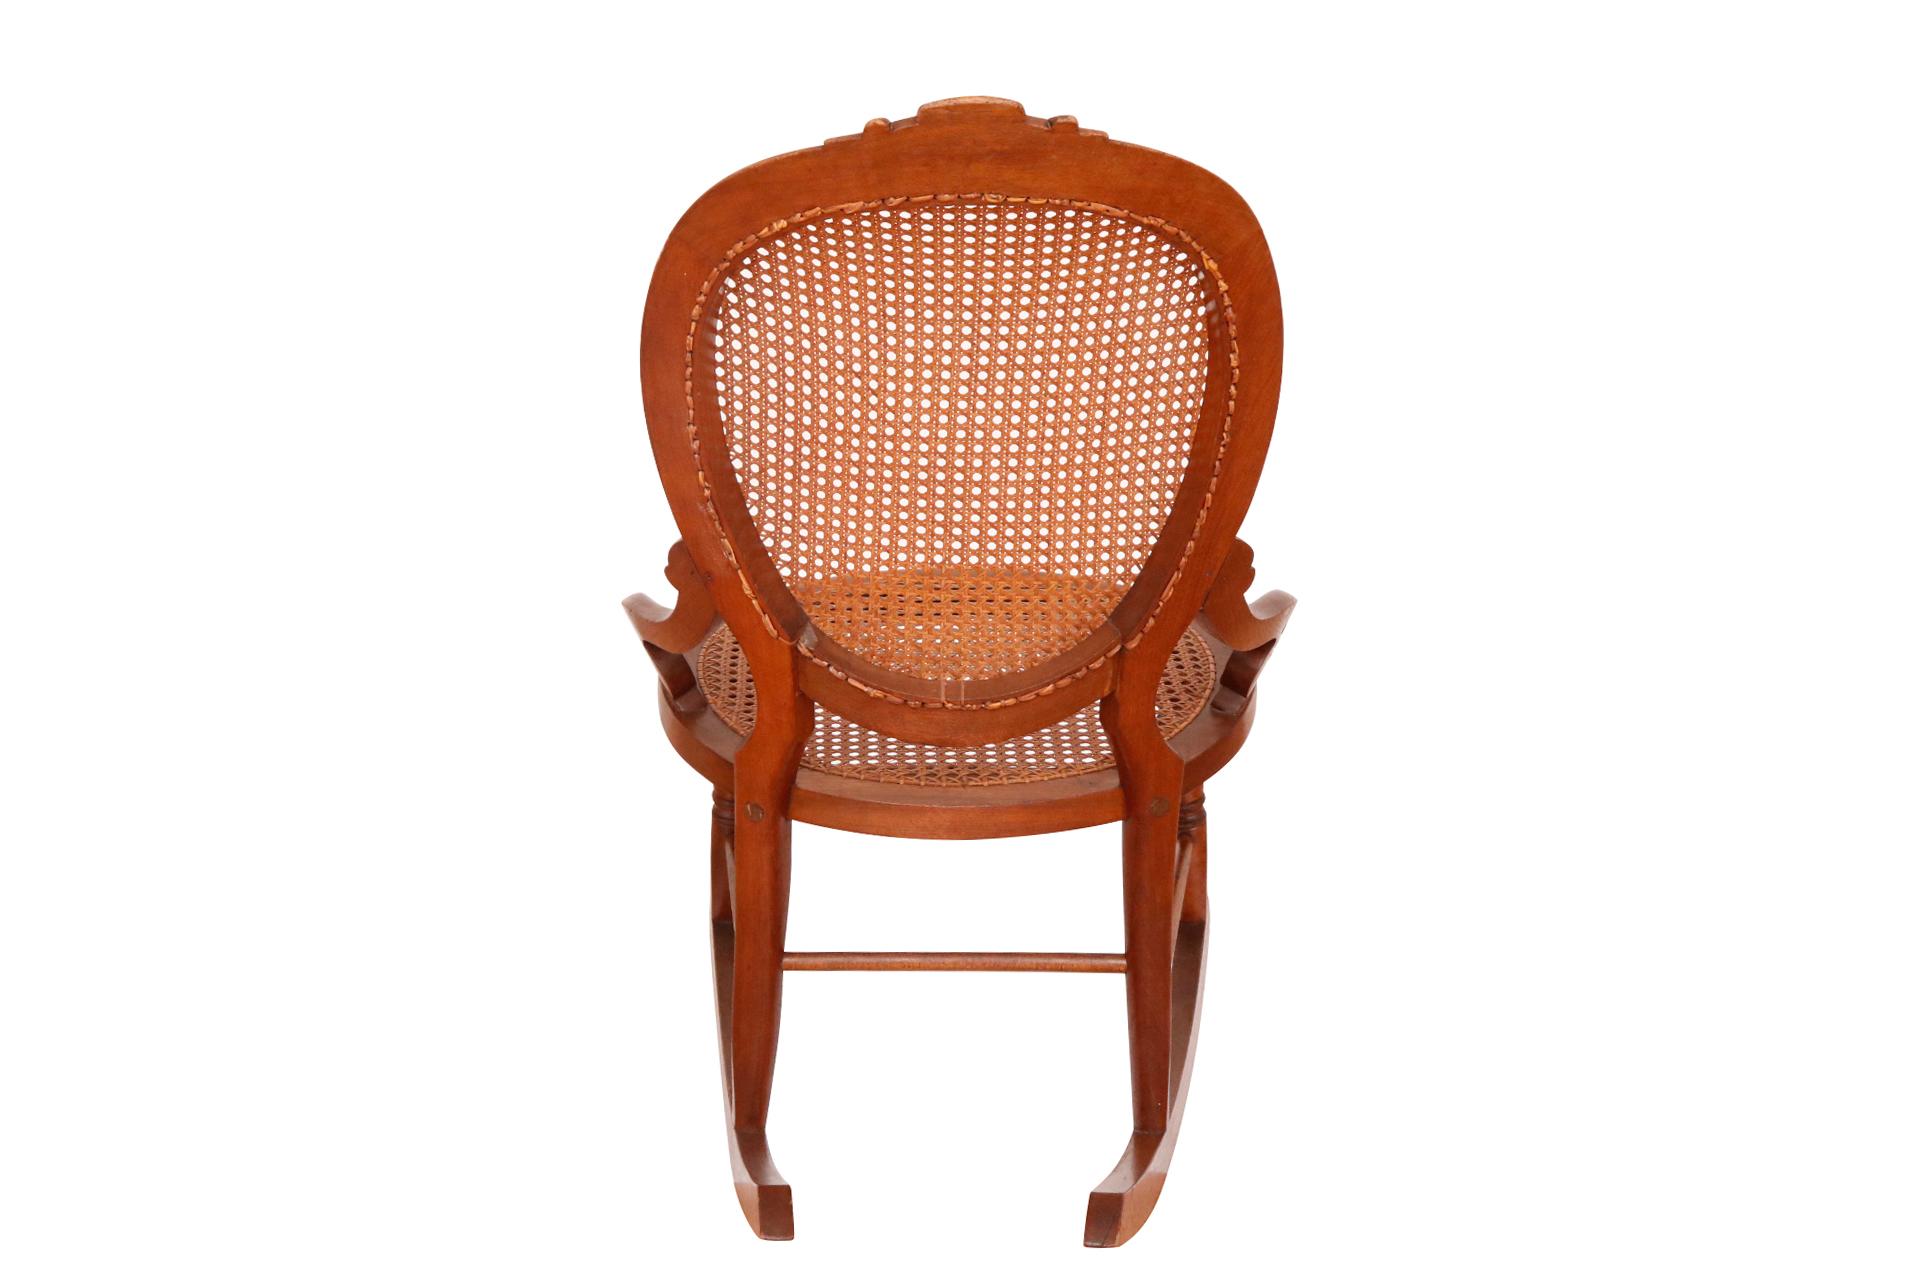 cane rocking chair price